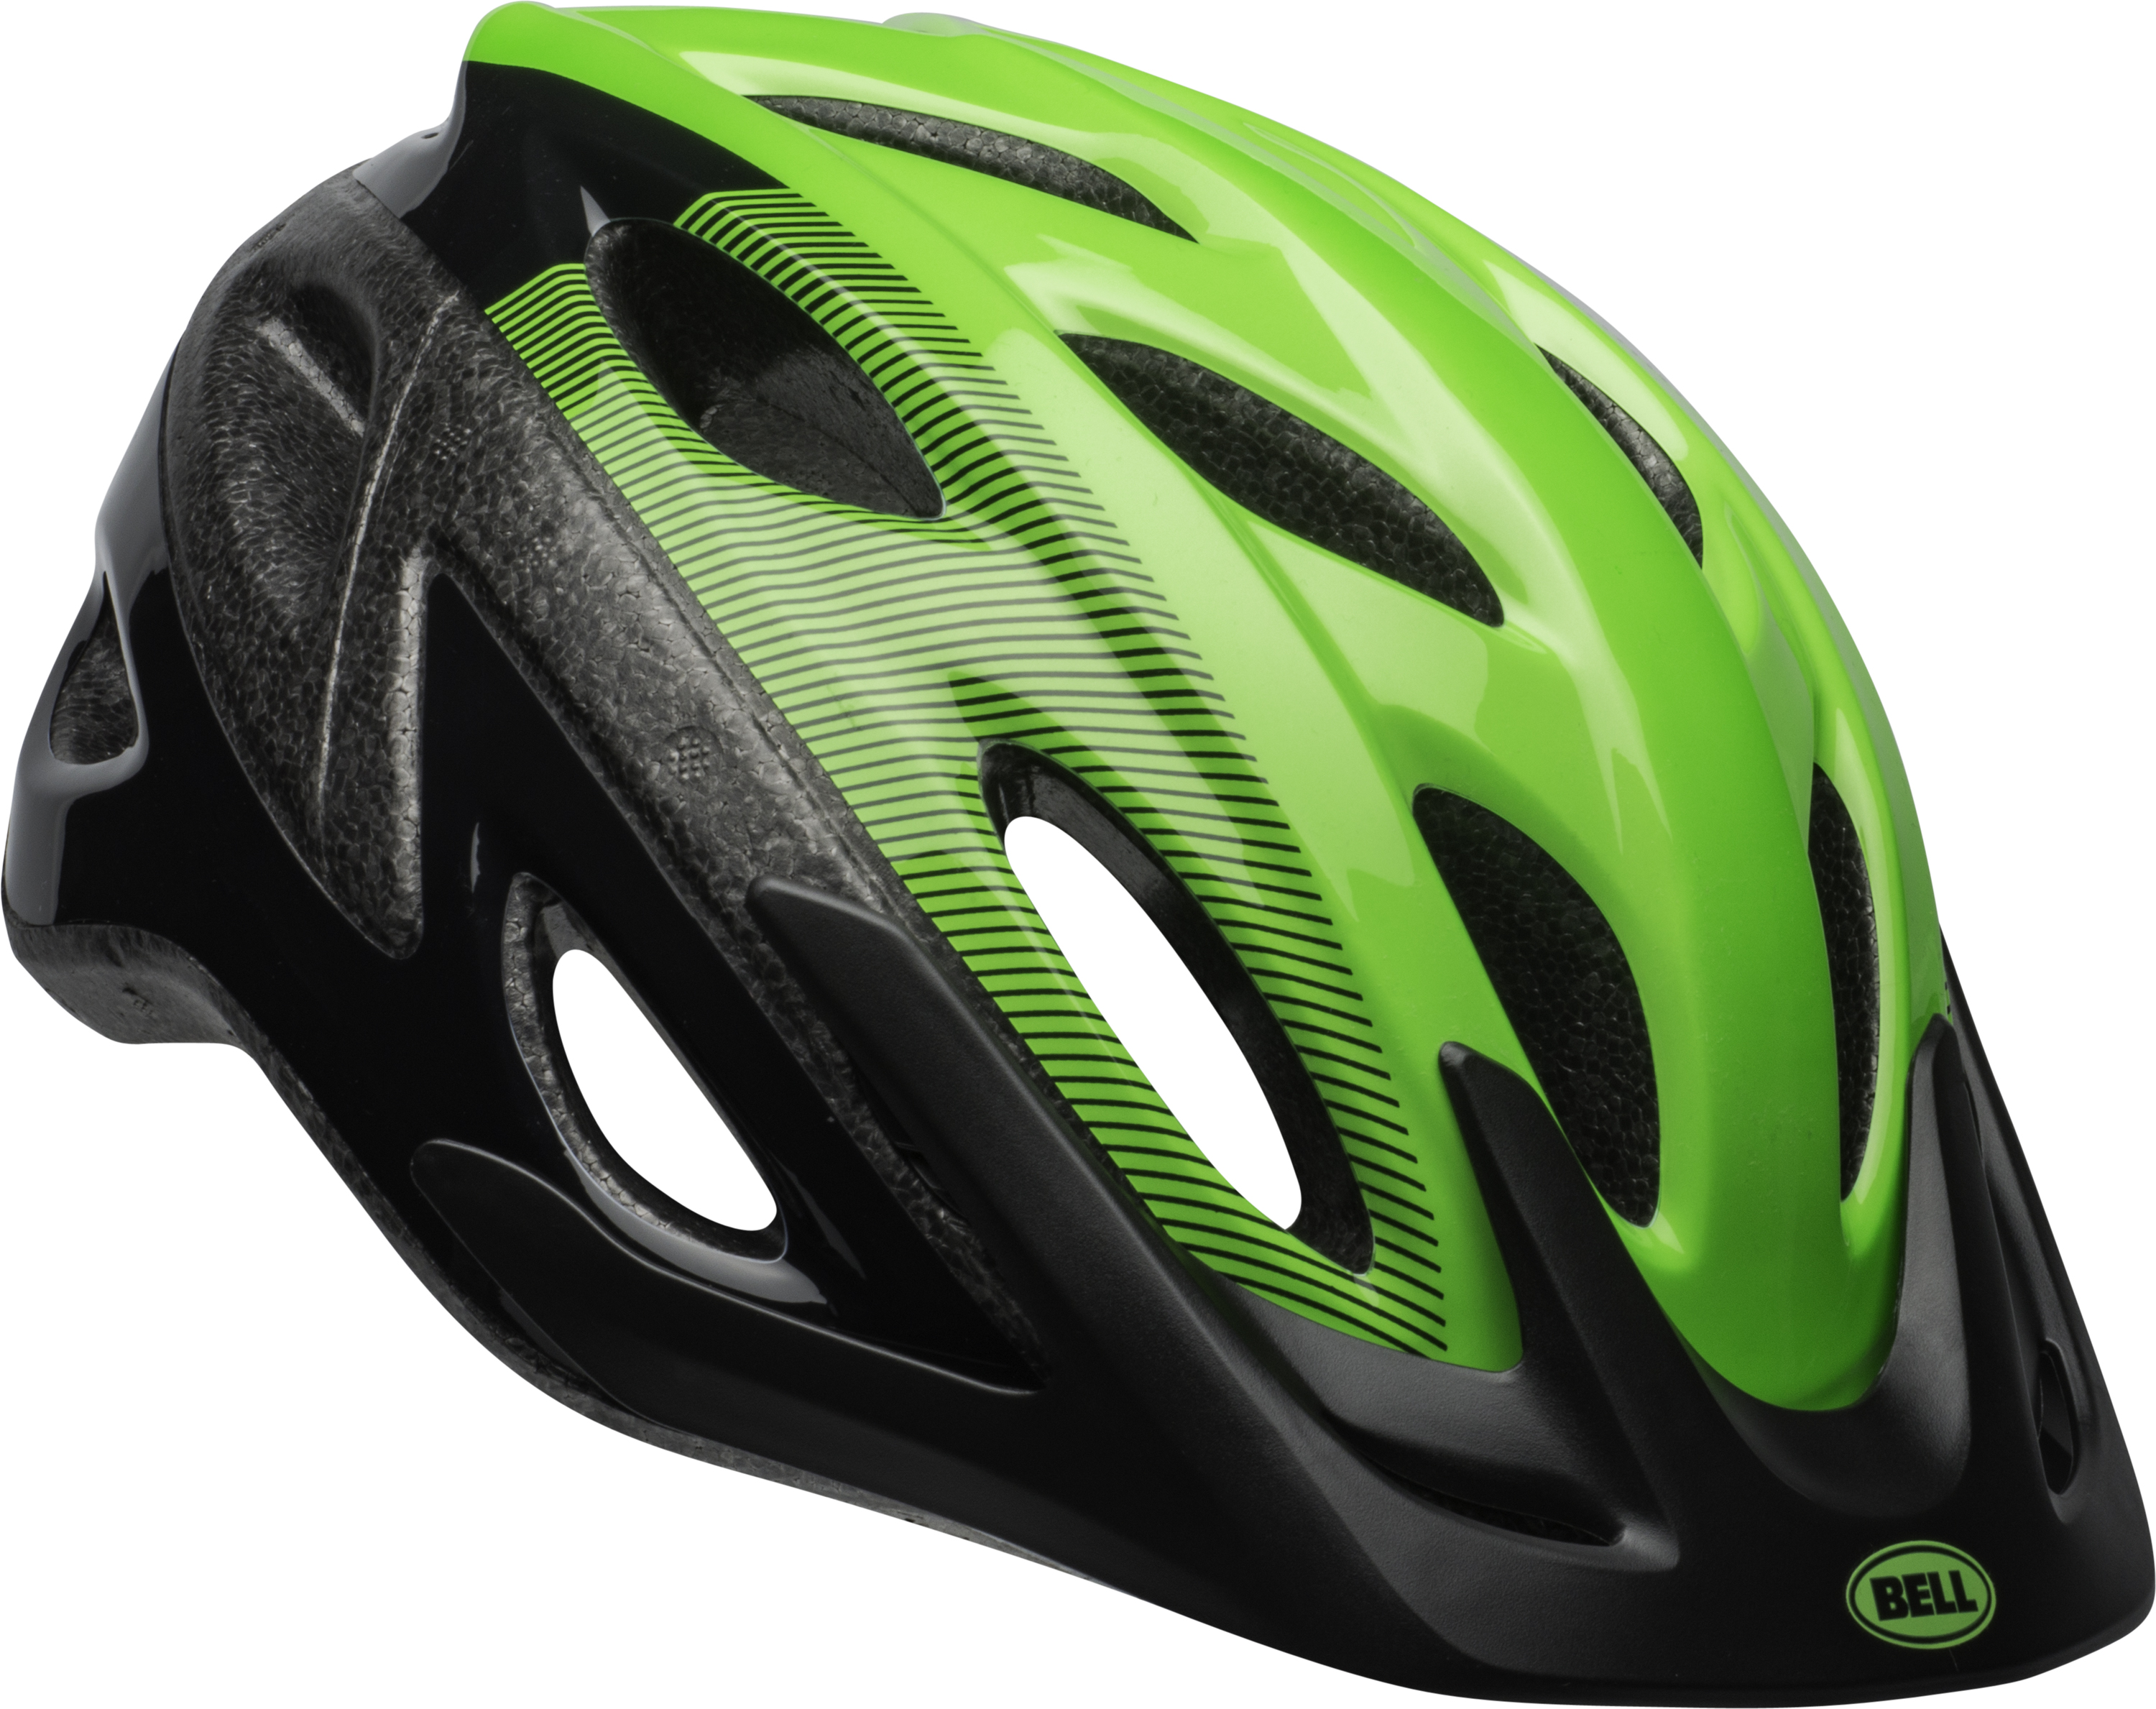 Bell Axle Bike Helmet, Black/Green, Adult 14+ (54-61cm) - image 1 of 9